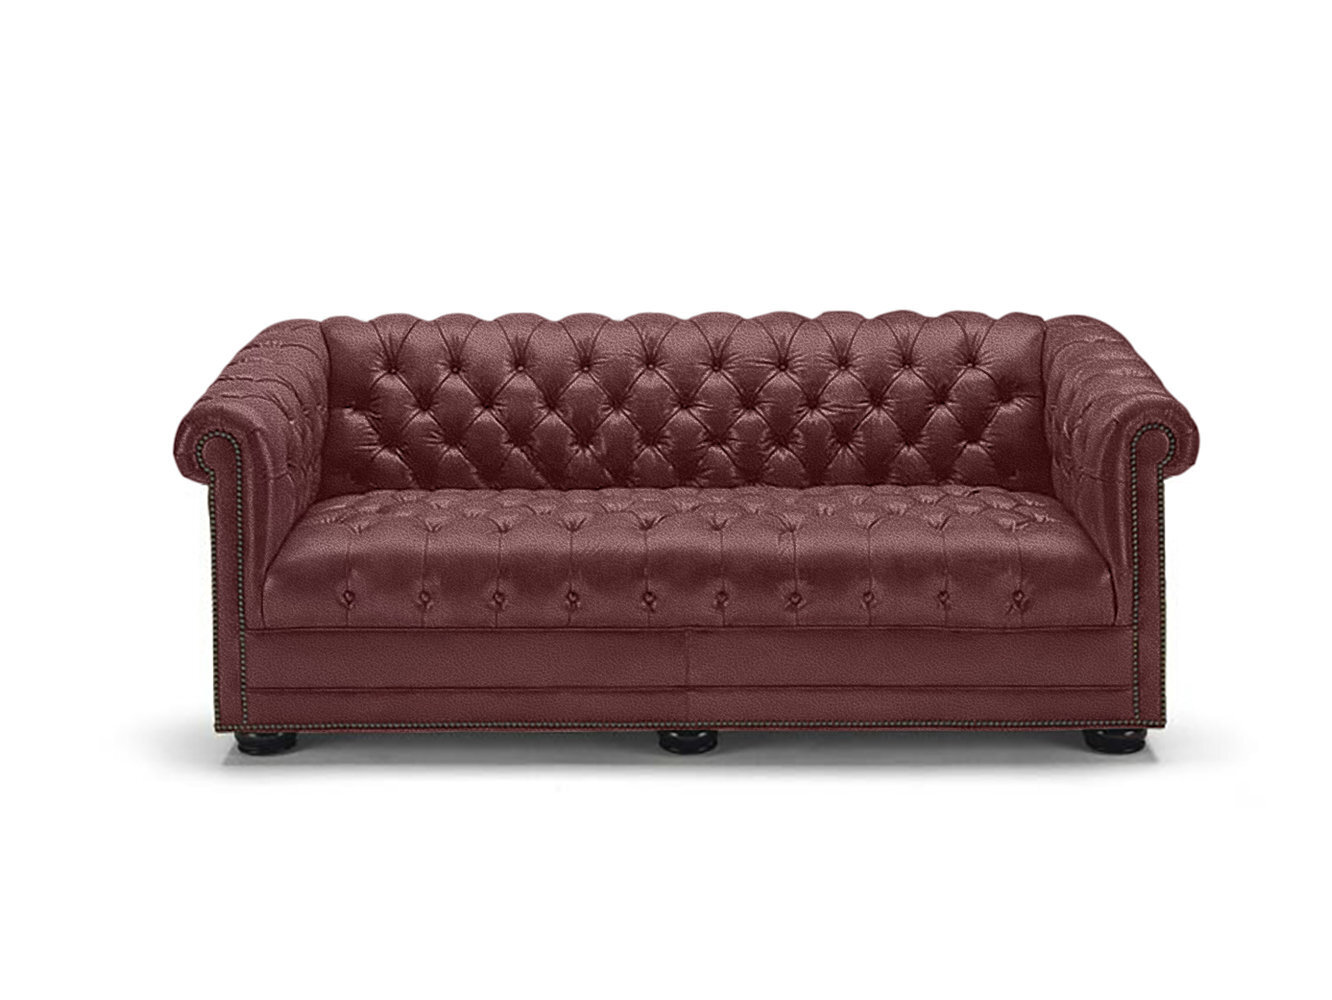 Chesterfield purple leather sofa